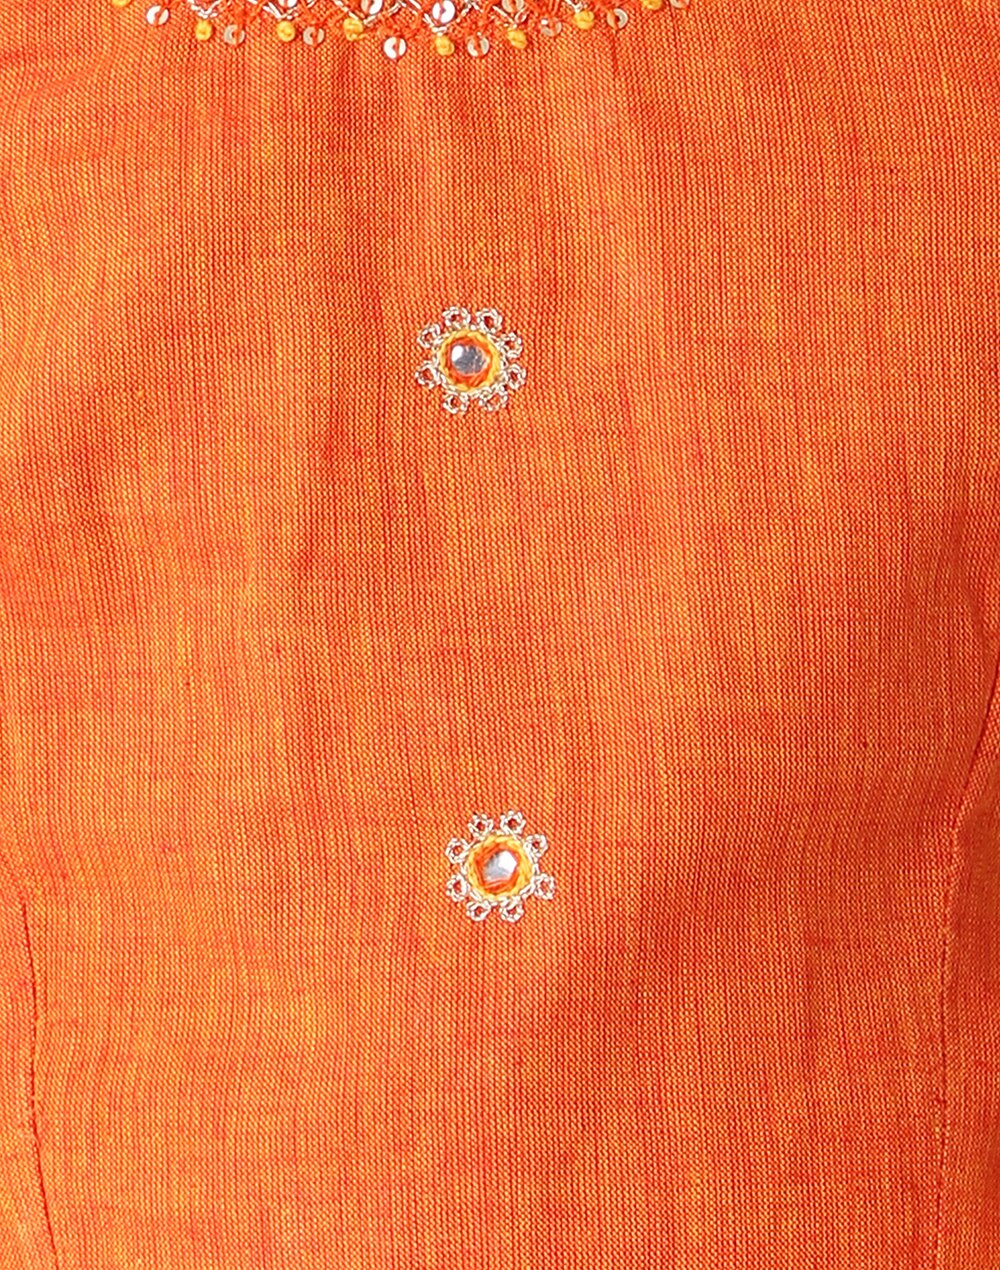 Cotton Embroidered 3 Pcs Set